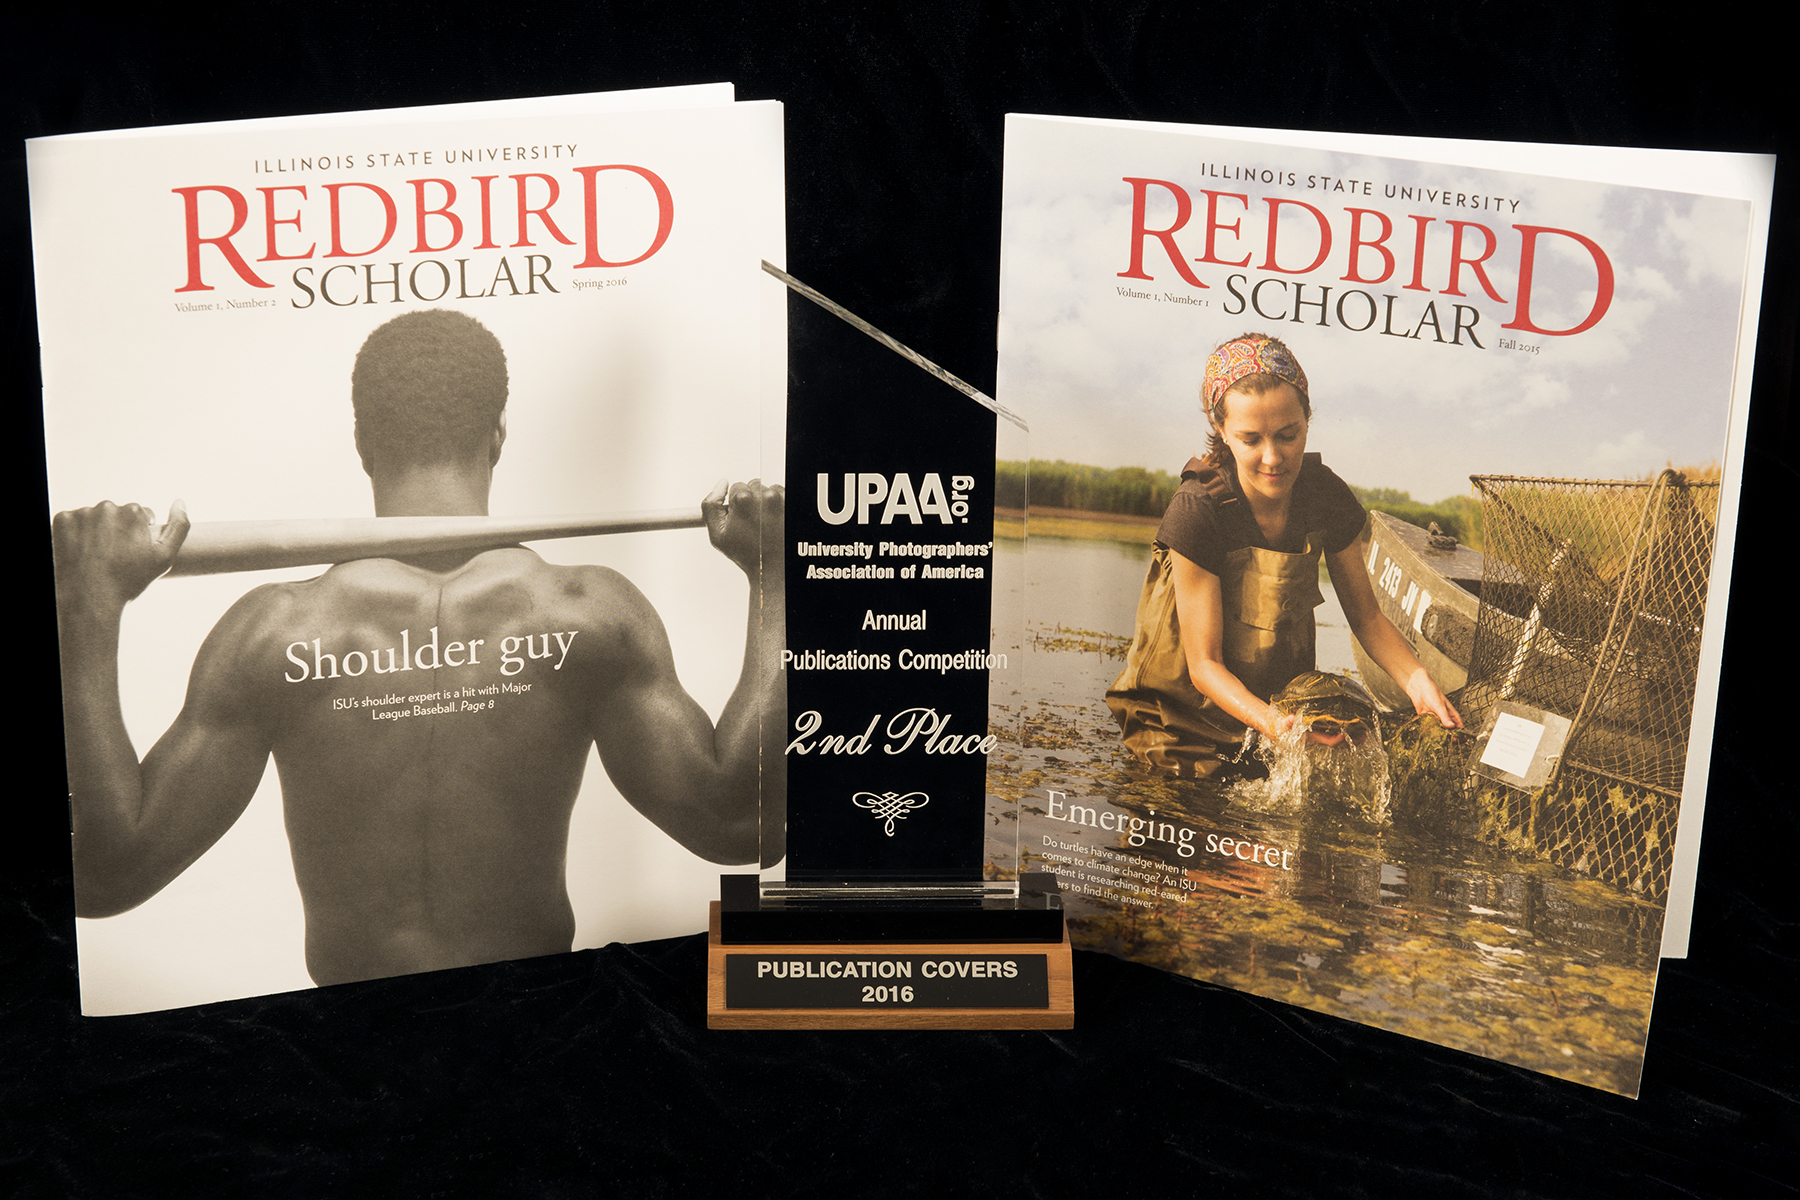 Redbird Scholar magazines with the award